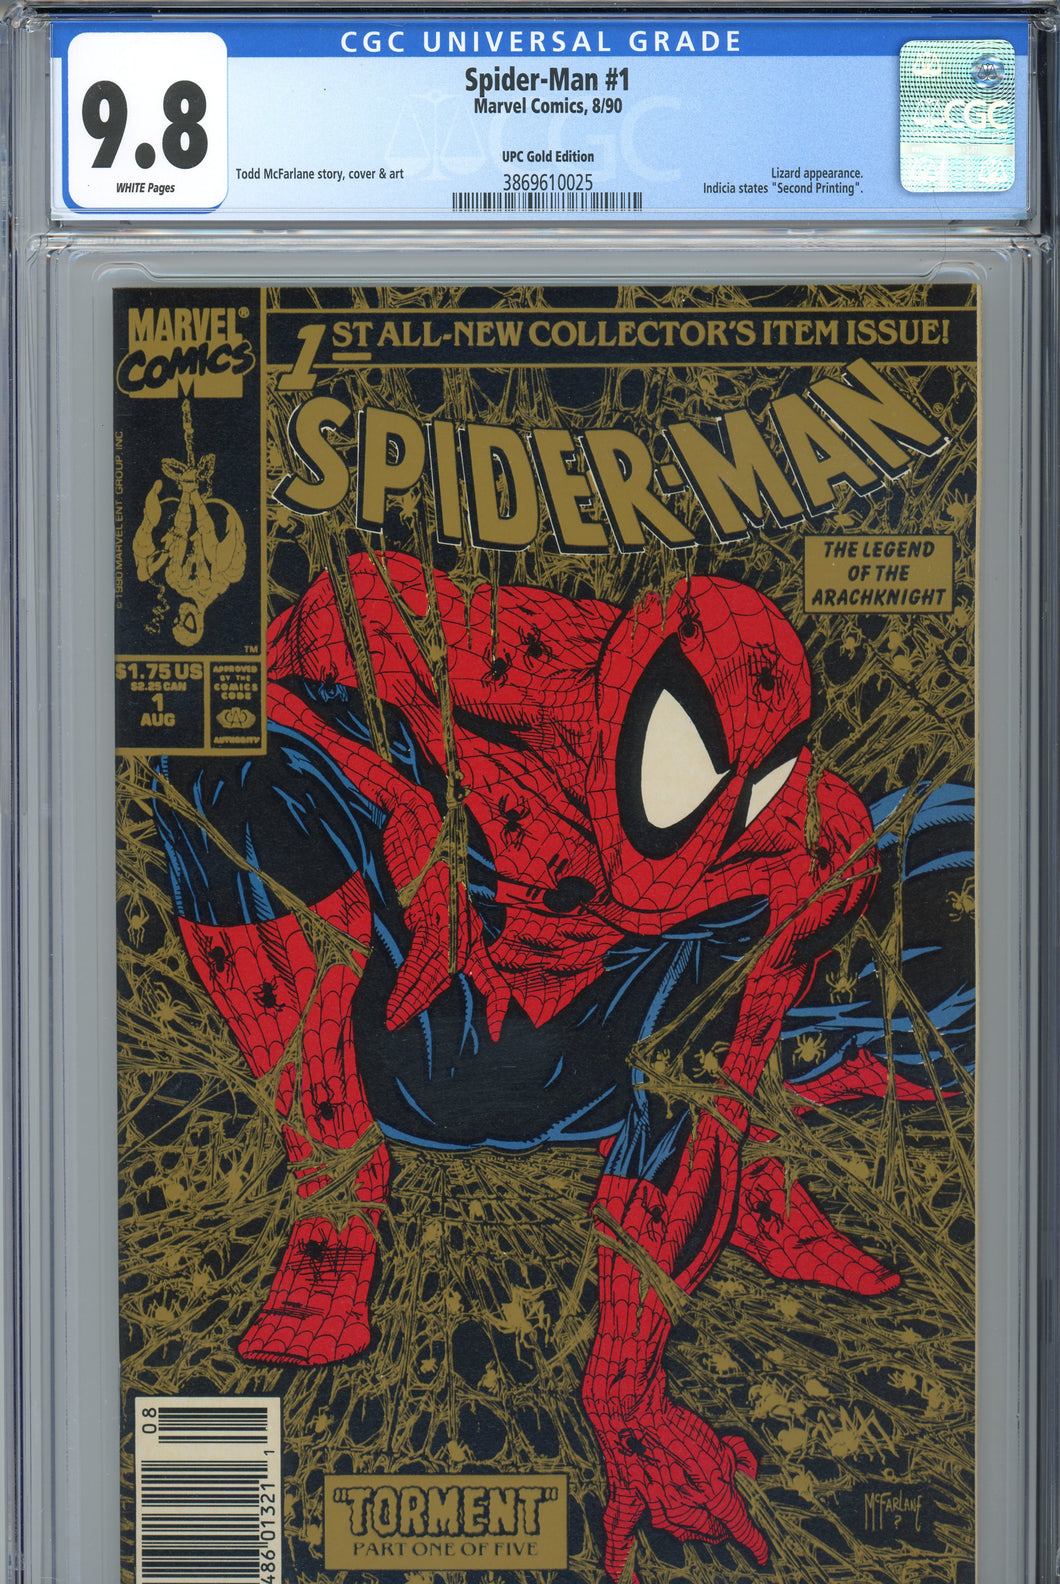 Spider-Man #1 UPC Gold Edition CGC 9.8